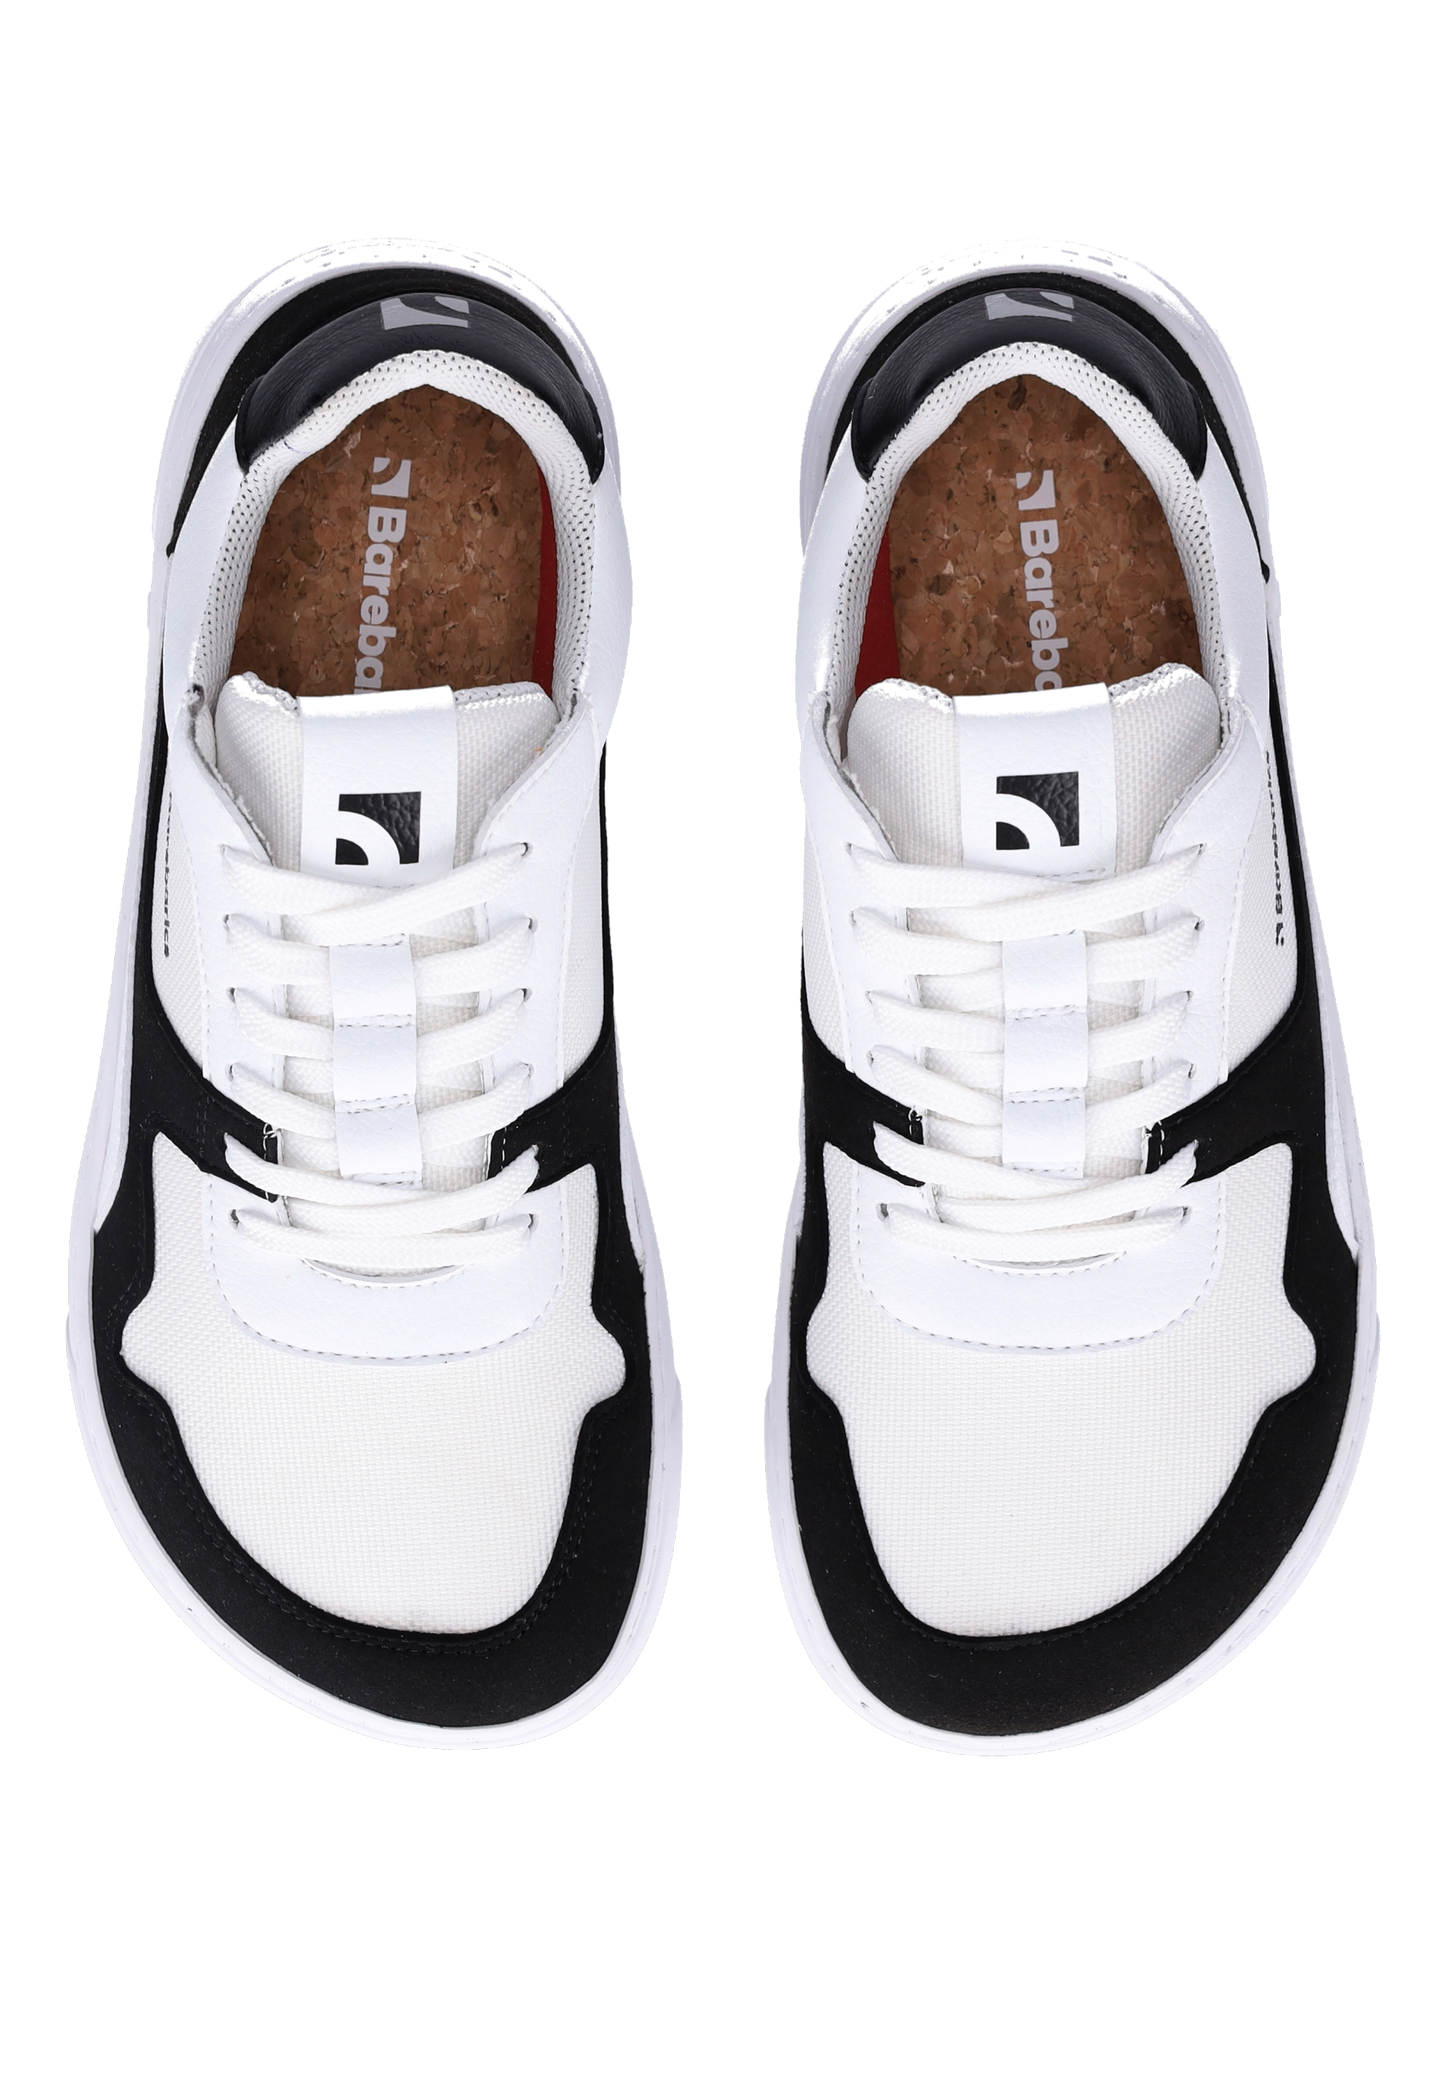 Barefoot Sneakers Barebarics - Zing - White & Black-Barebarics-Cacles Barefoot